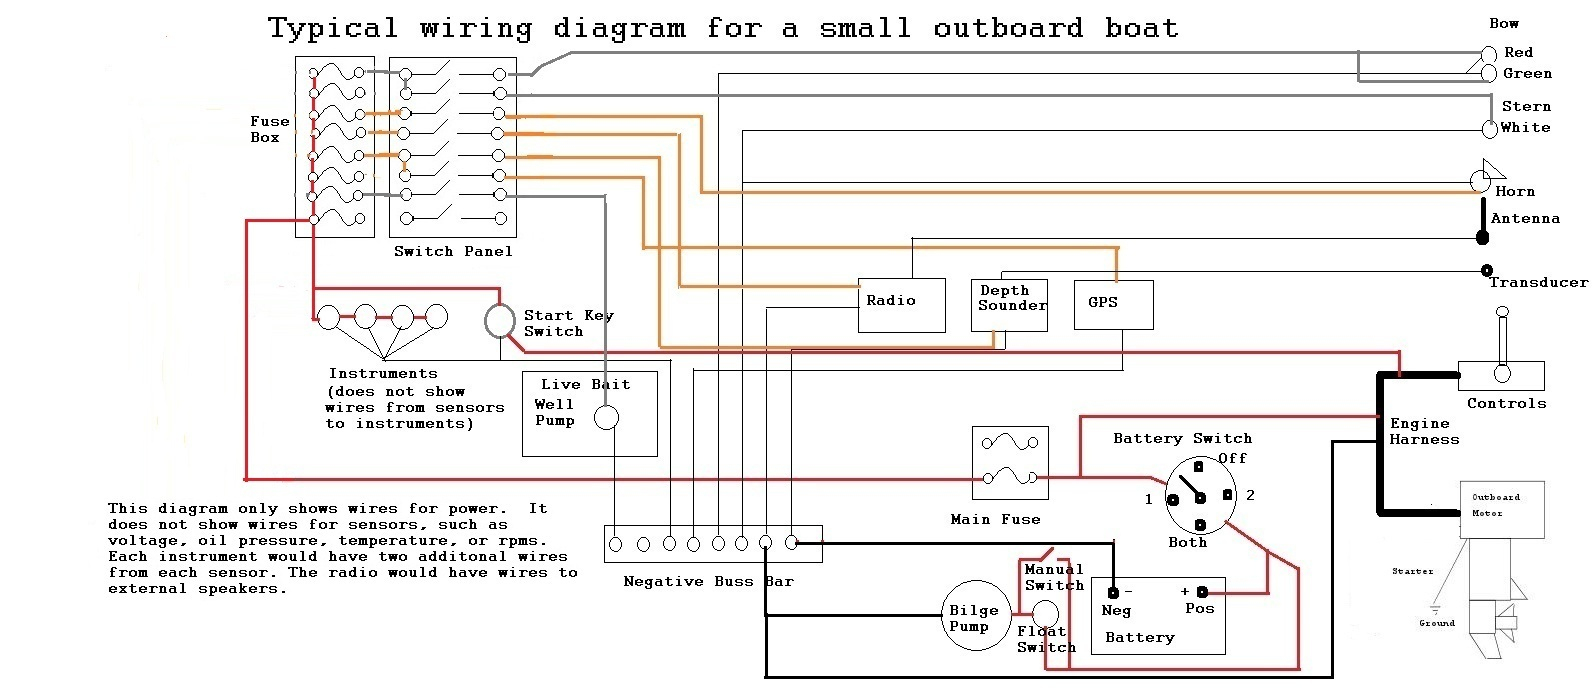 Boat Wiring For Dummies Diagram - Data Wiring Diagram ...